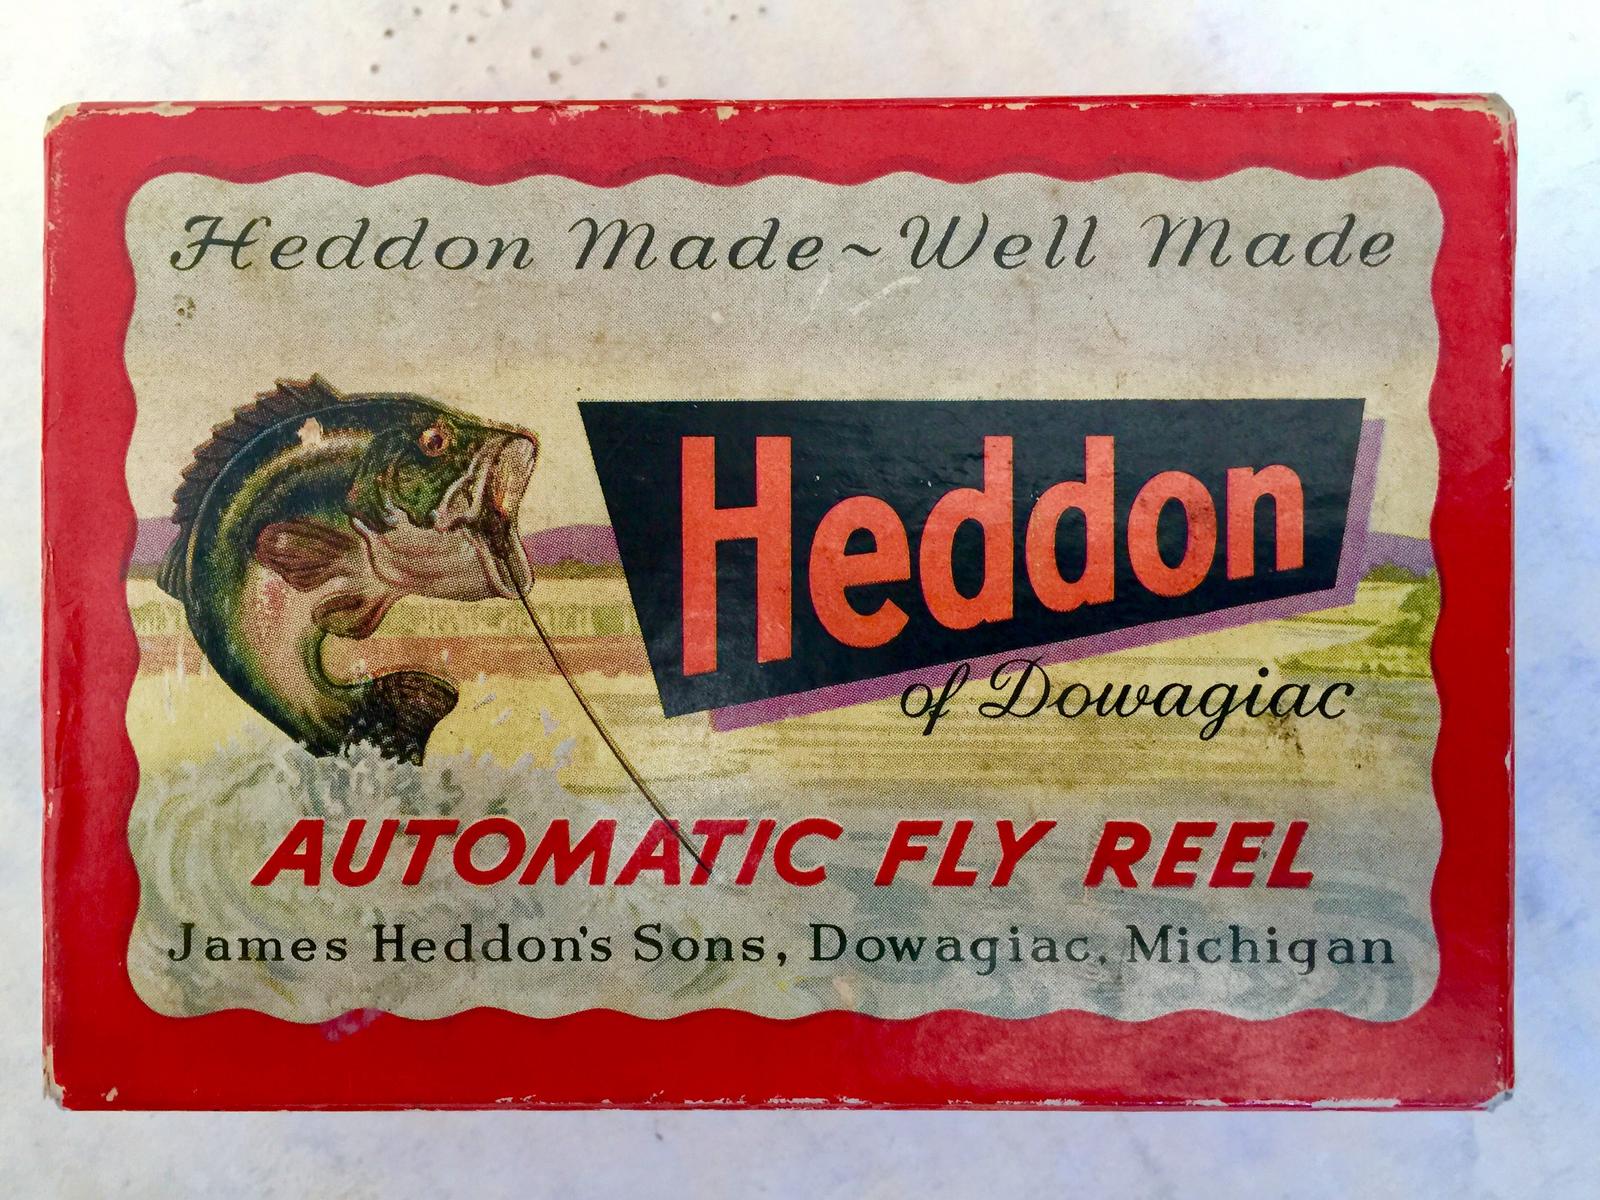 Sold at Auction: (4) Vintage James Heddon's Sons Fishing Tackle